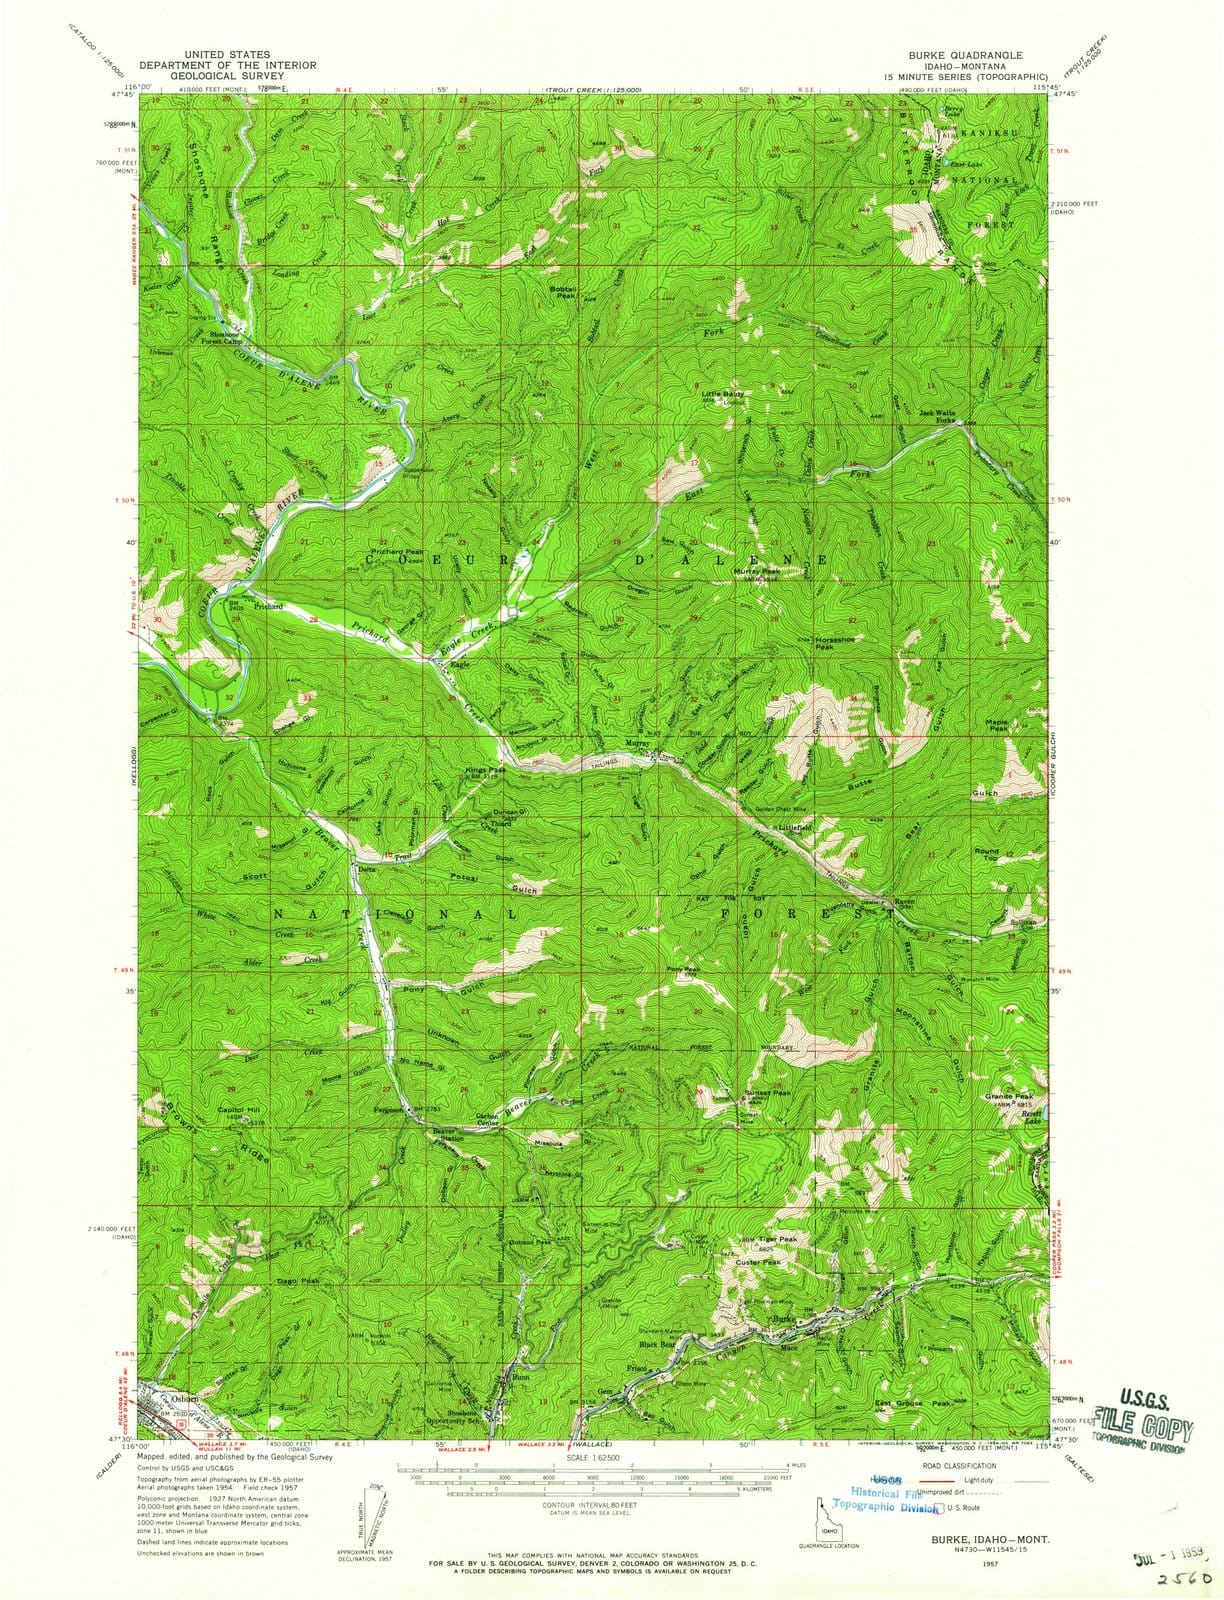 1957 Burke, ID - Idaho - USGS Topographic Map